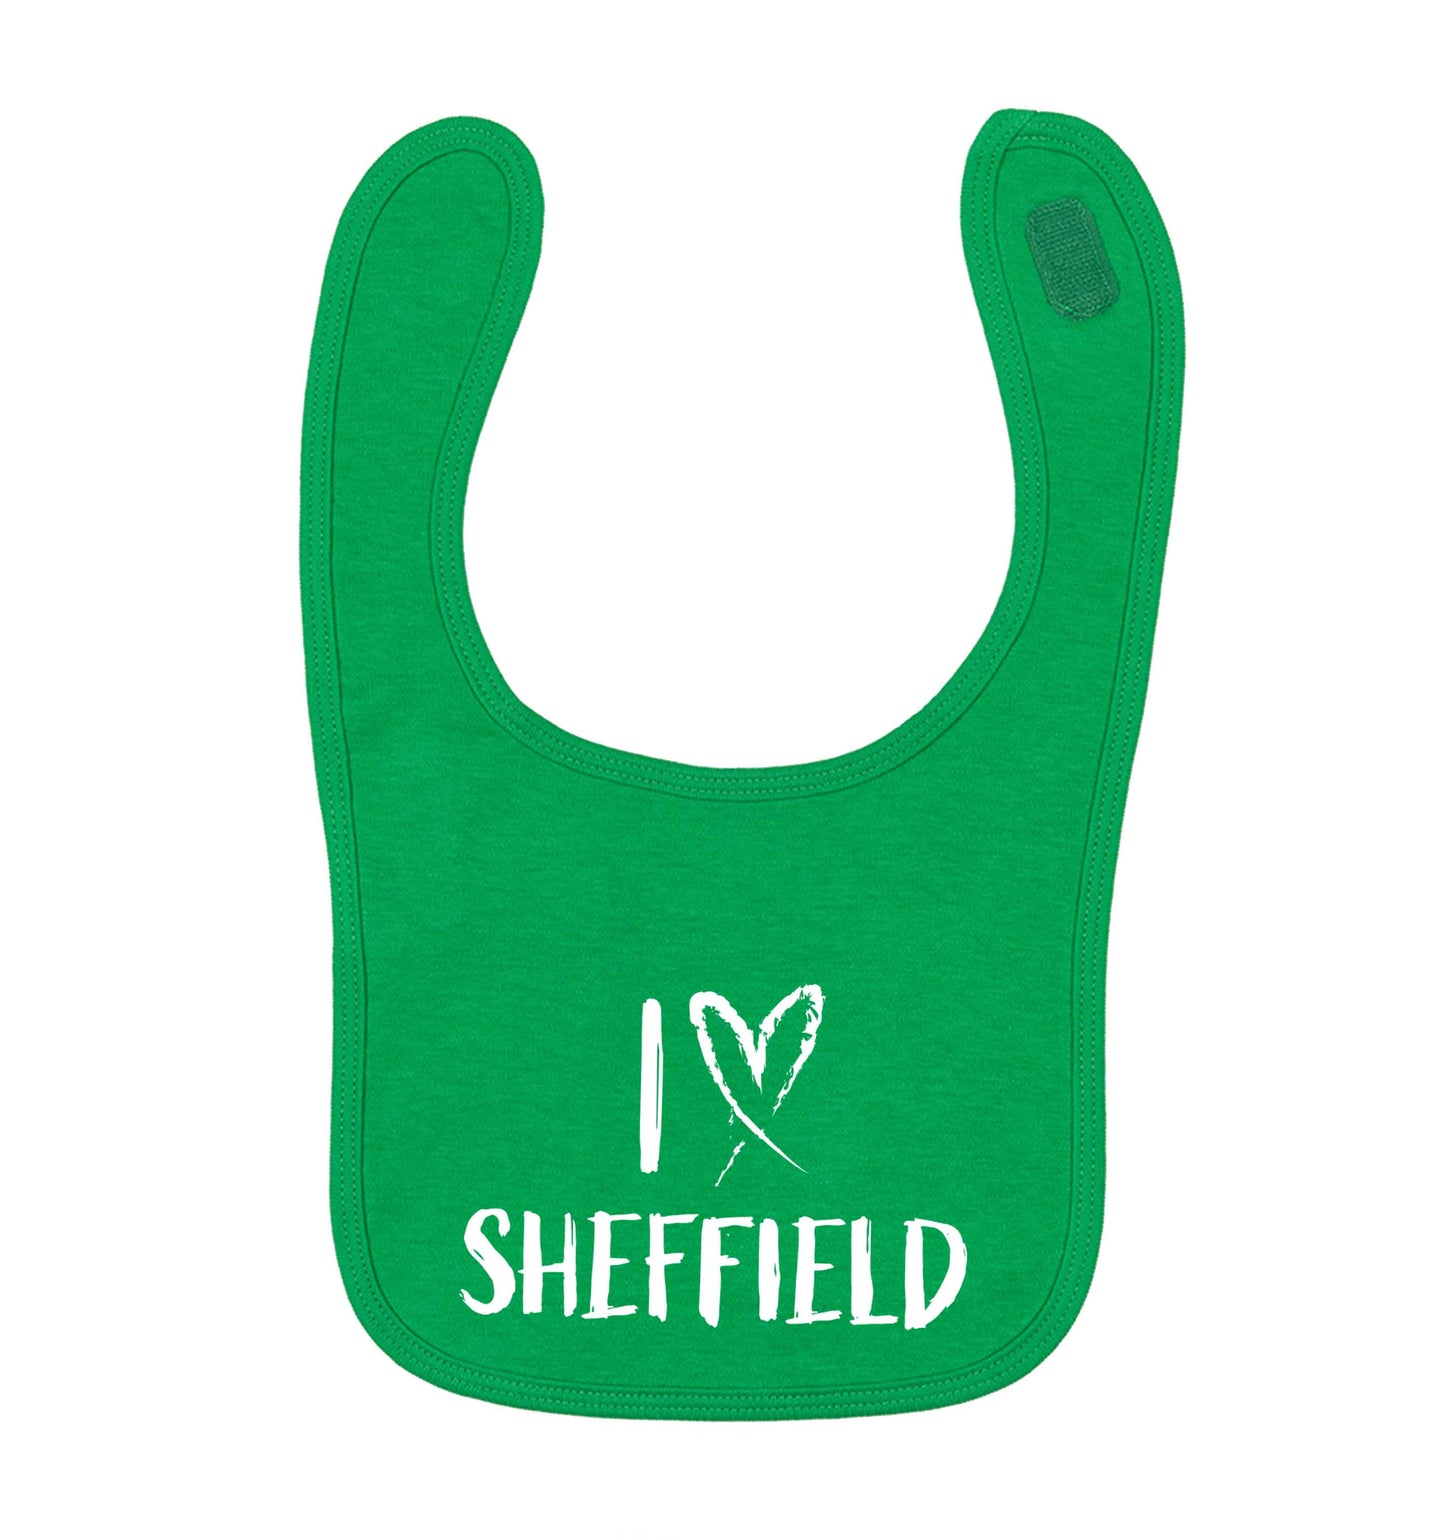 I love Sheffield green baby bib